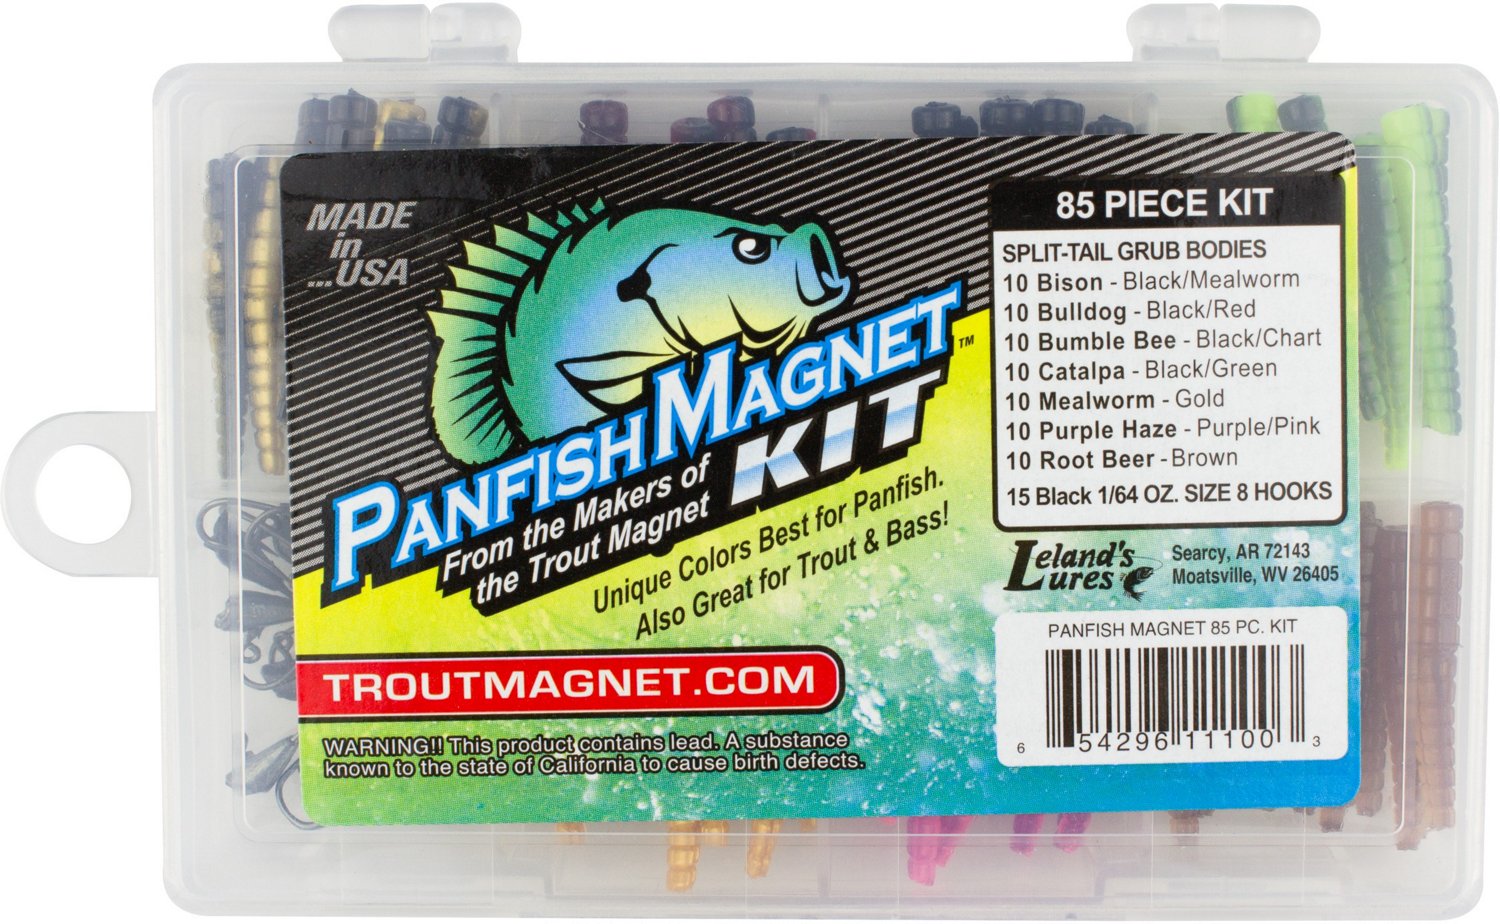 Trout Magnet Panfish Magnet Bait Kit